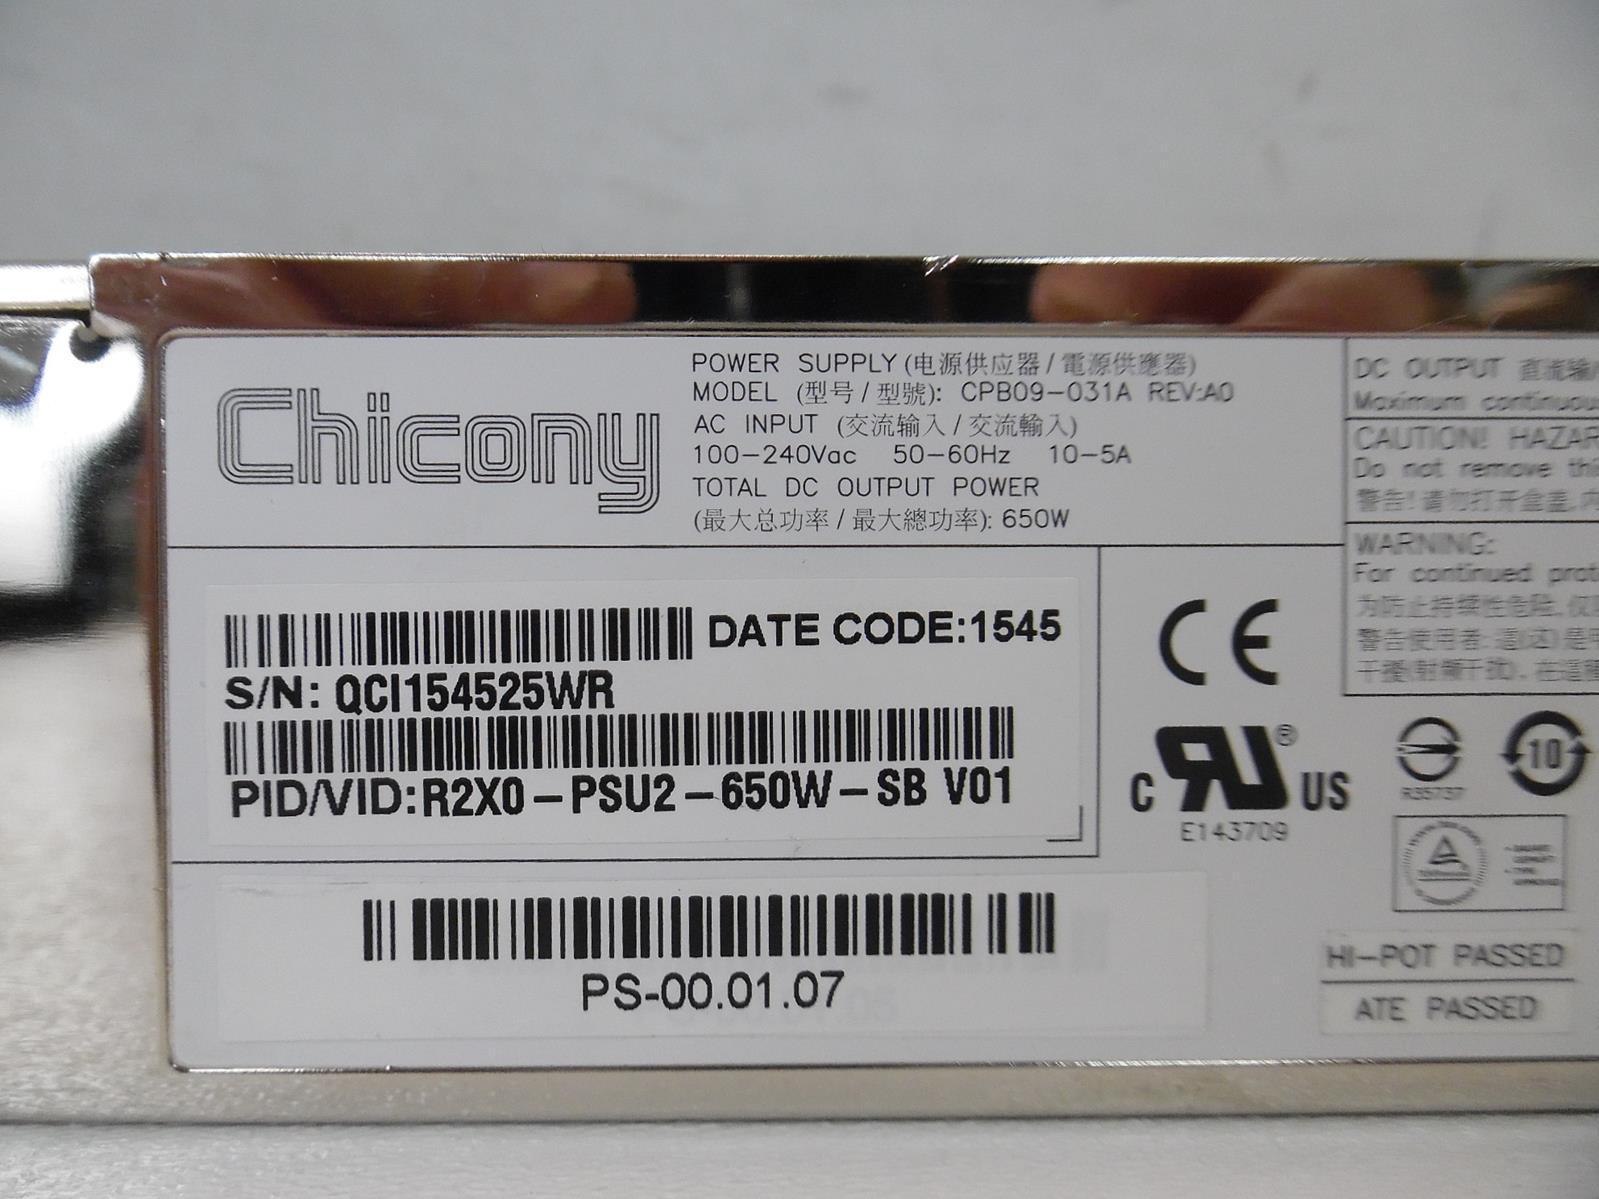 CHICONY CPB09-031A CISCO 74-7541-02 R2X0-PSU2-650W-SB 650W POWER SUPPLY - Click Image to Close